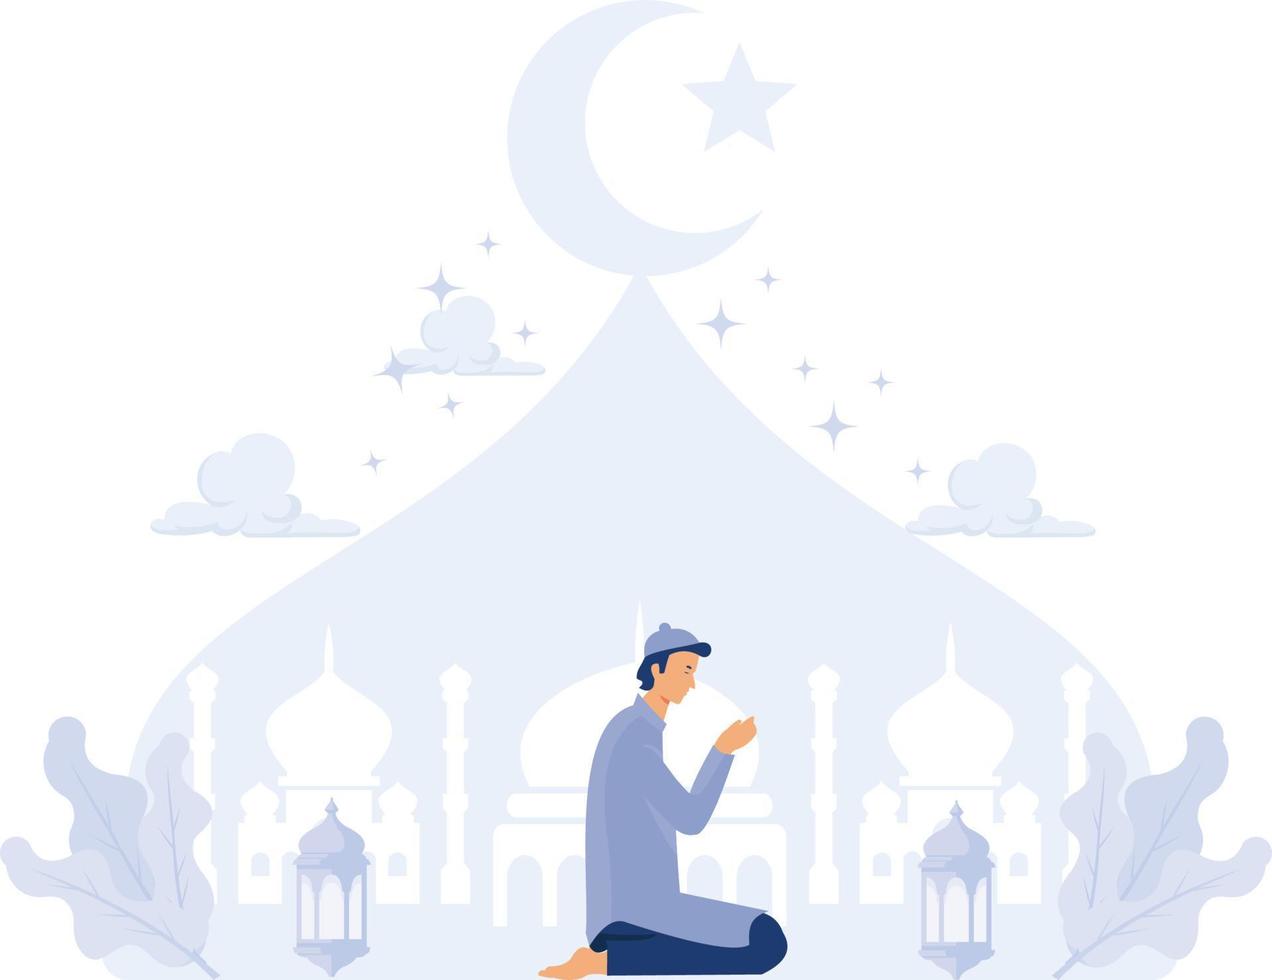 musulman prière illustration, Ramadan kareem salutation carte postale, plat vecteur moderne illustration